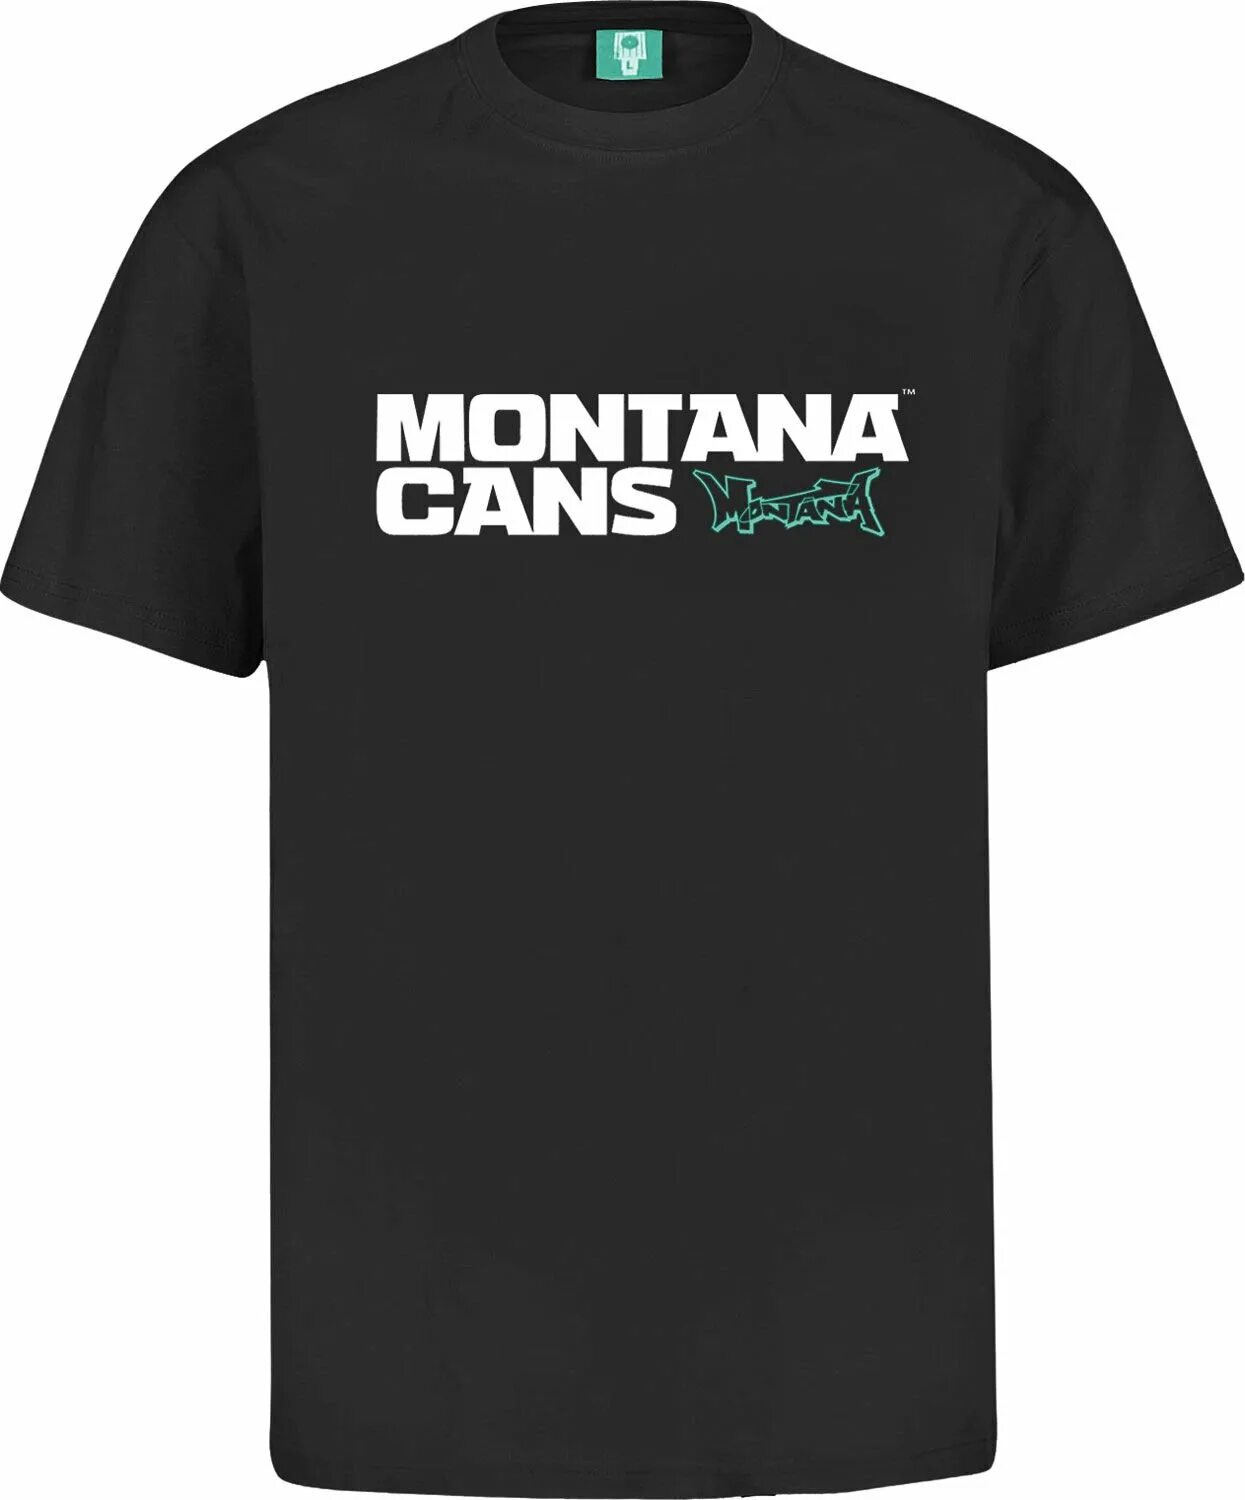 Montana cans. Montana логотип. Монтана cans лого. Монтана Блэк лого. Футболка Montana cans.